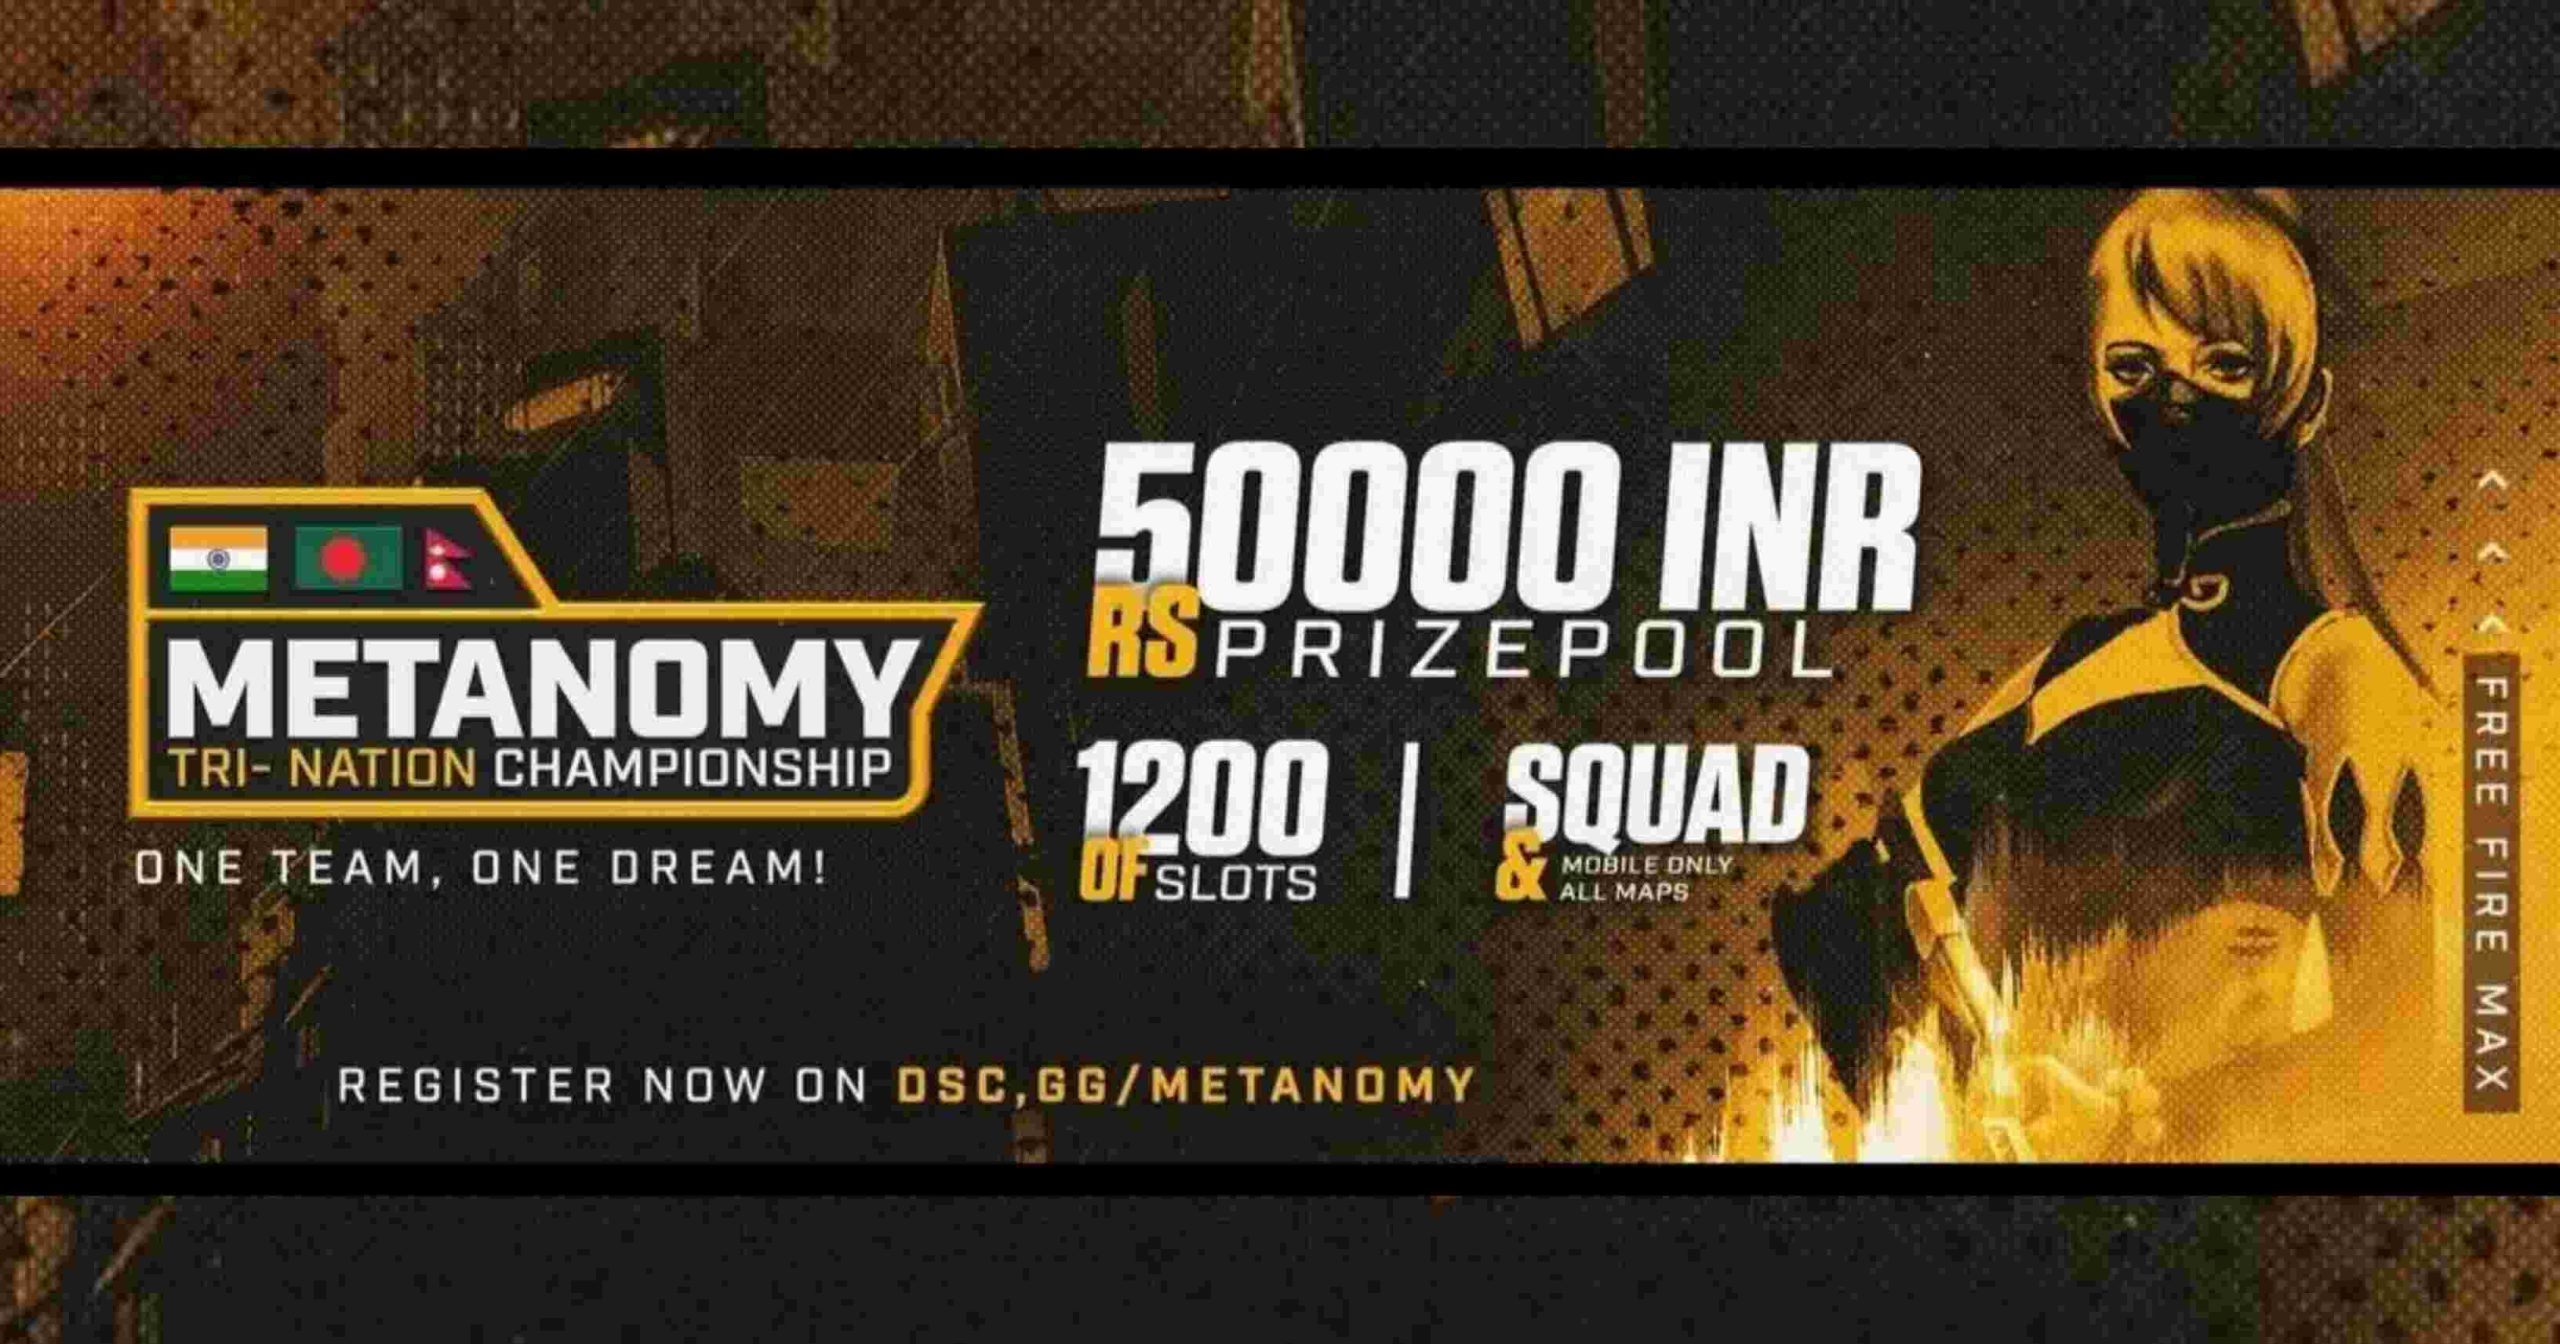 Metanomy is bringing Free Fire Tri-Nation Championship